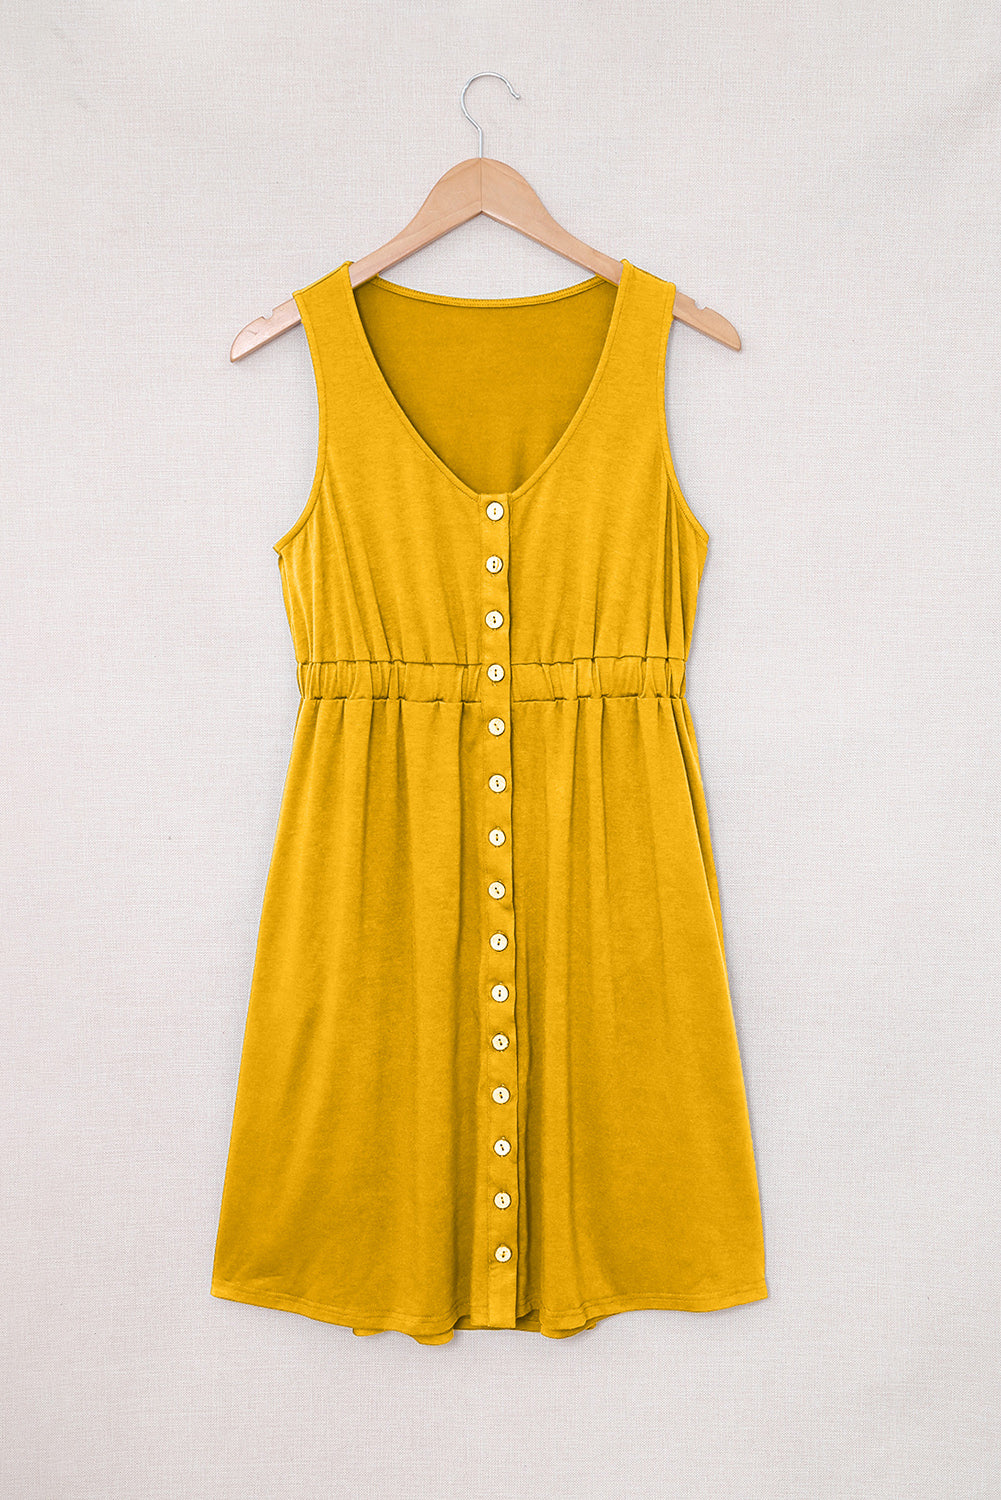 Sleeveless Button Down Mini Dress - Alonna's Legging Land